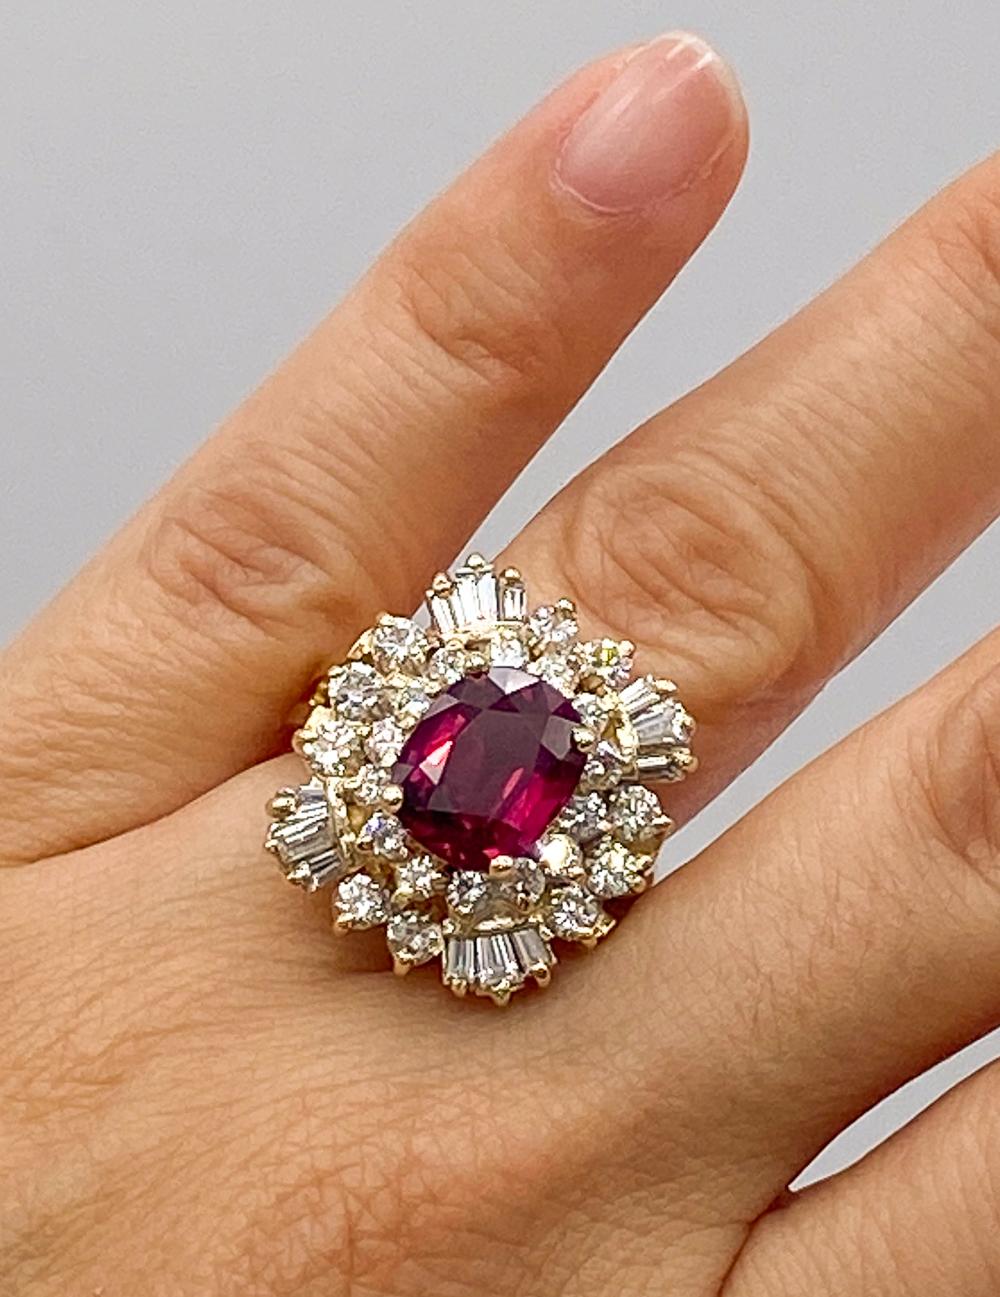 Burmese ruby and diamond ring, est. $80,000-$90,000